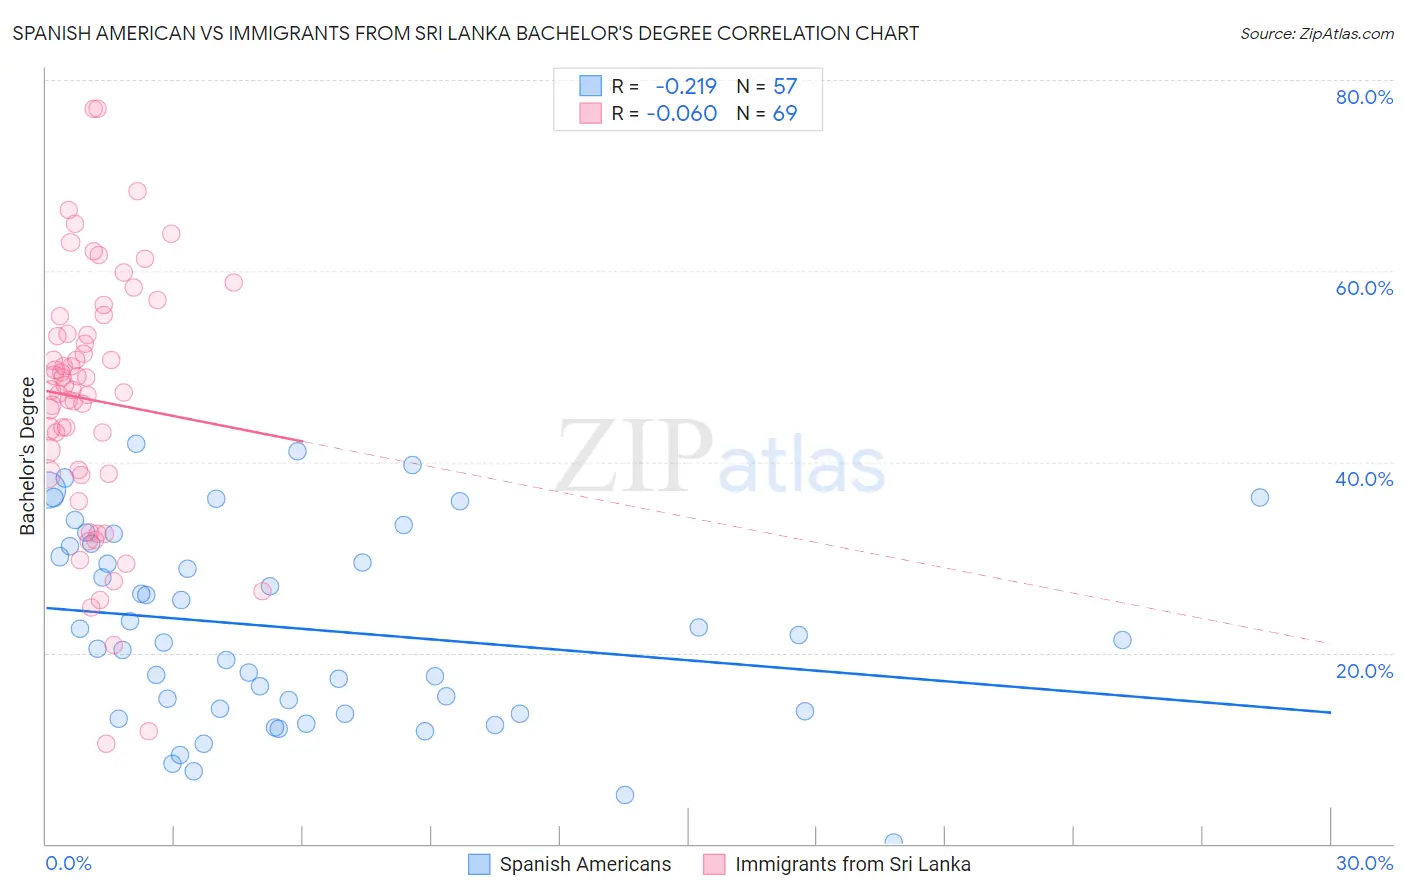 Spanish American vs Immigrants from Sri Lanka Bachelor's Degree